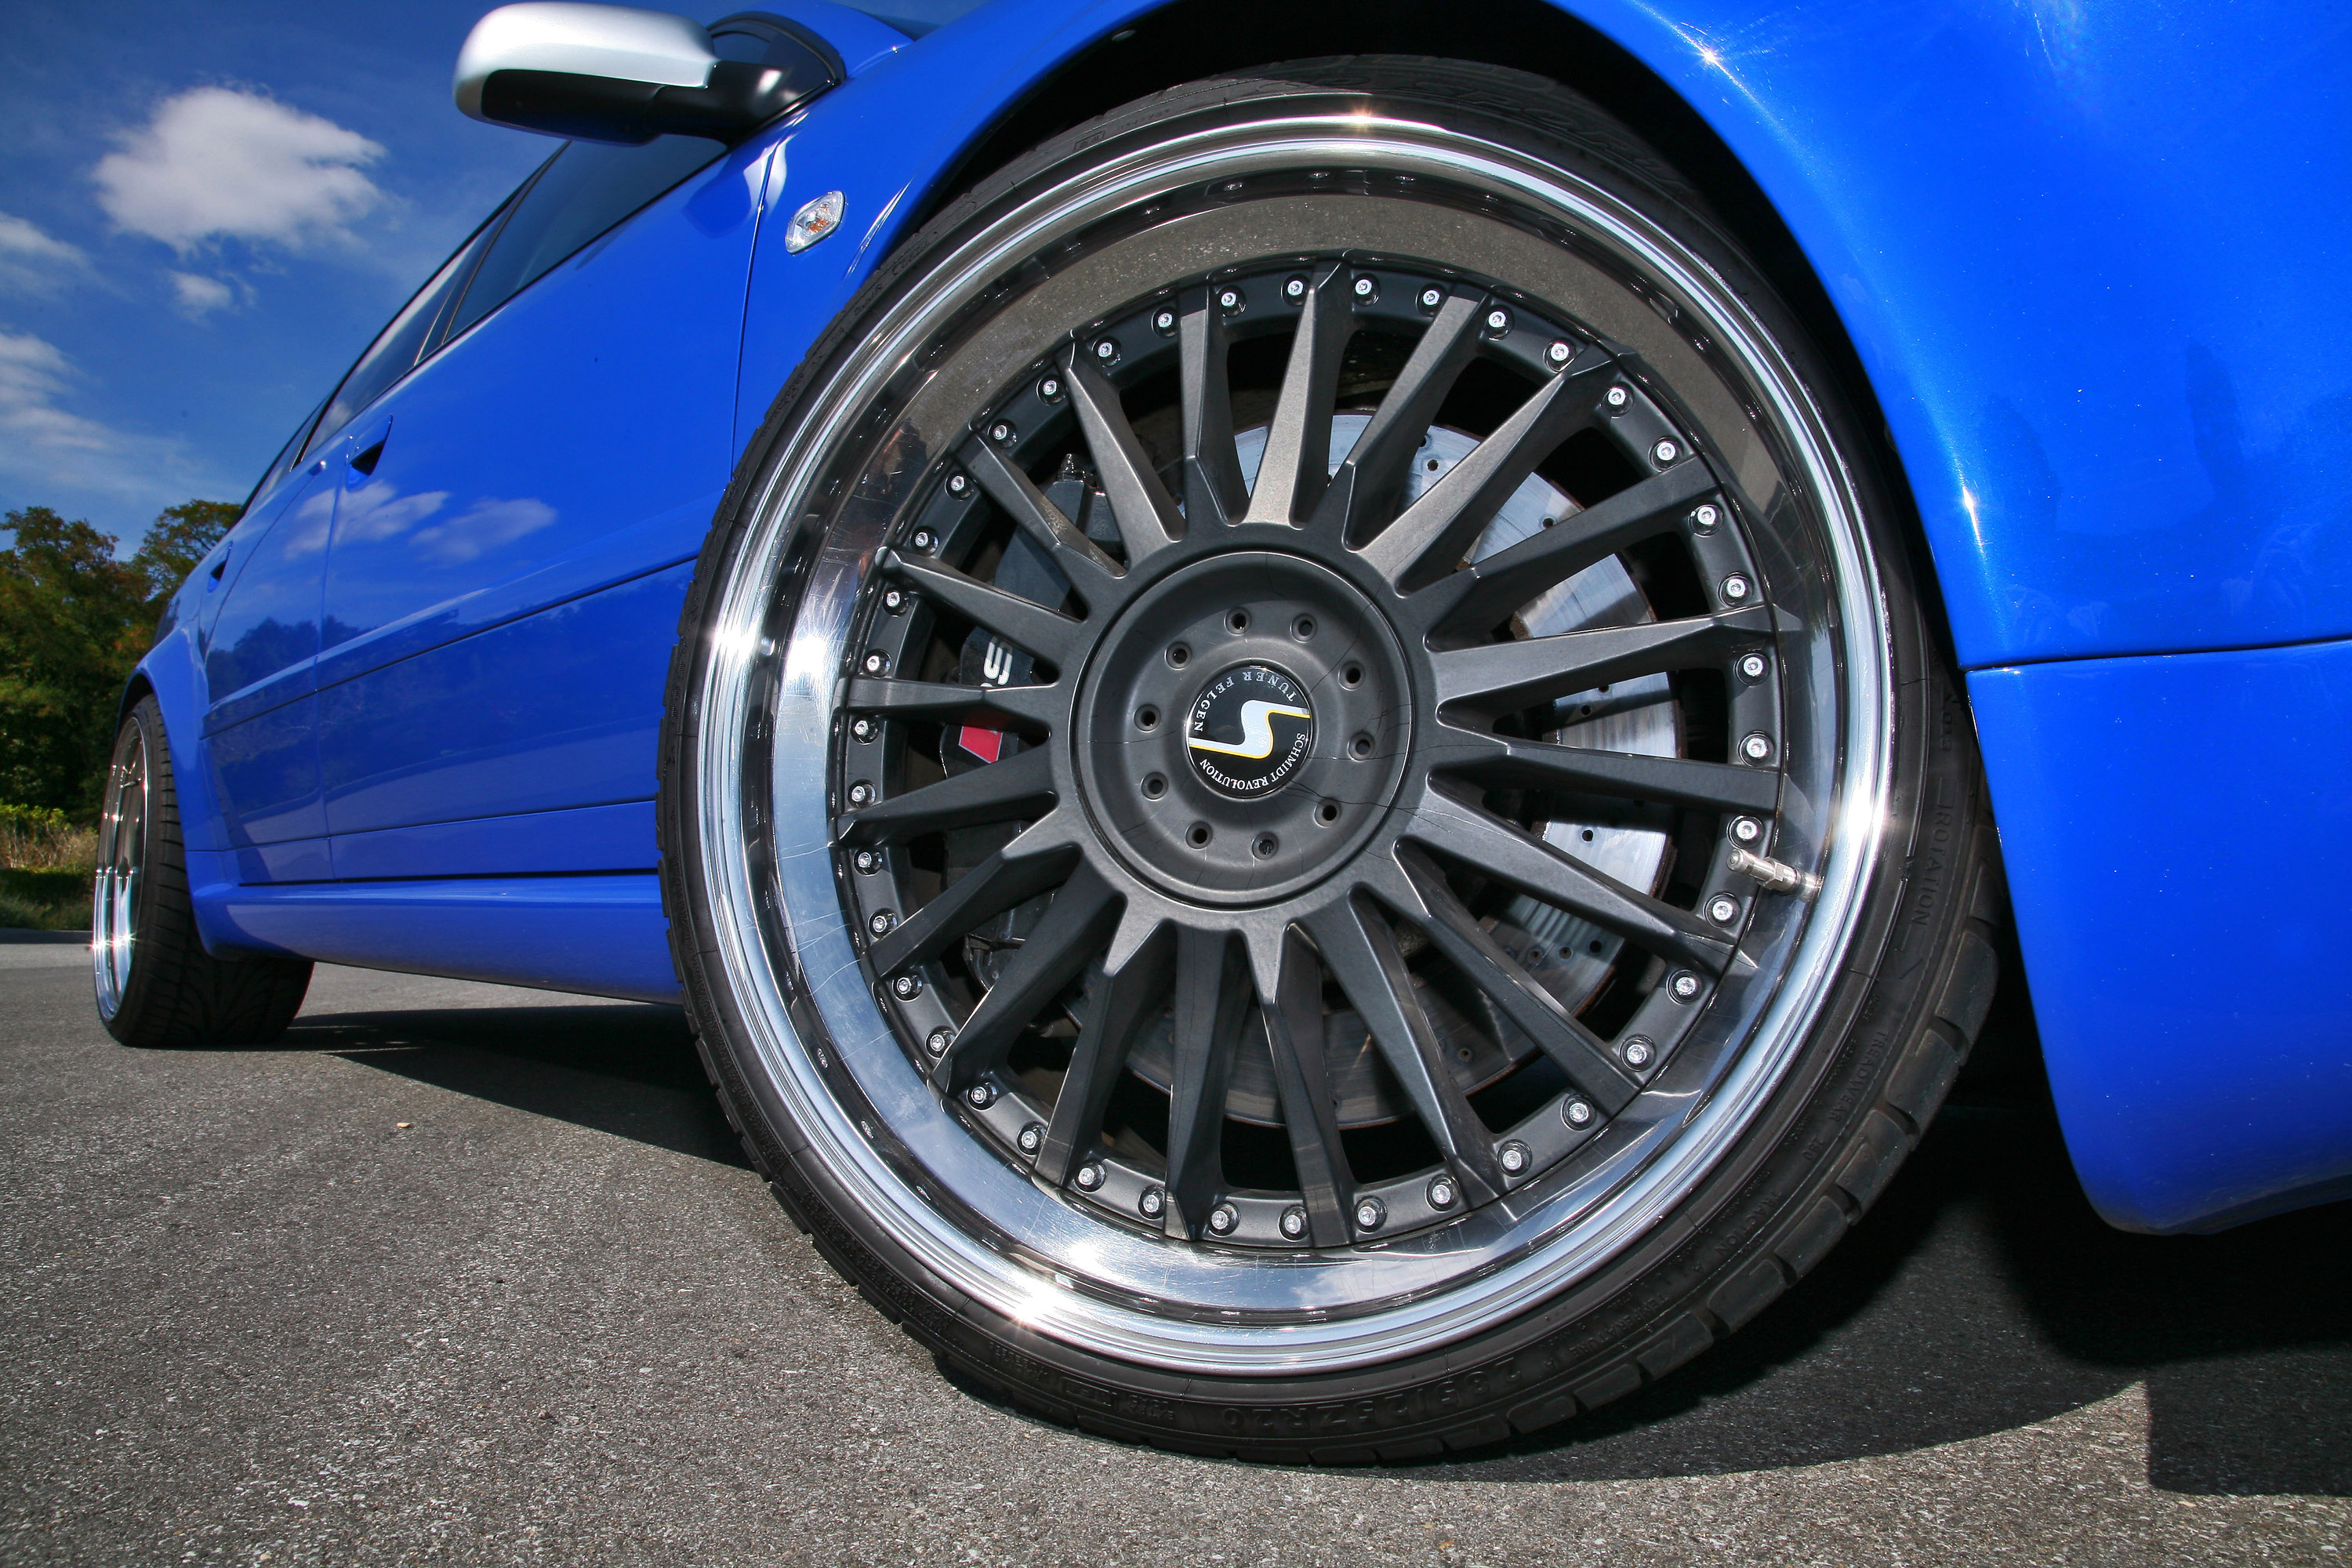 MFK Autosport Powercar Audi RS6